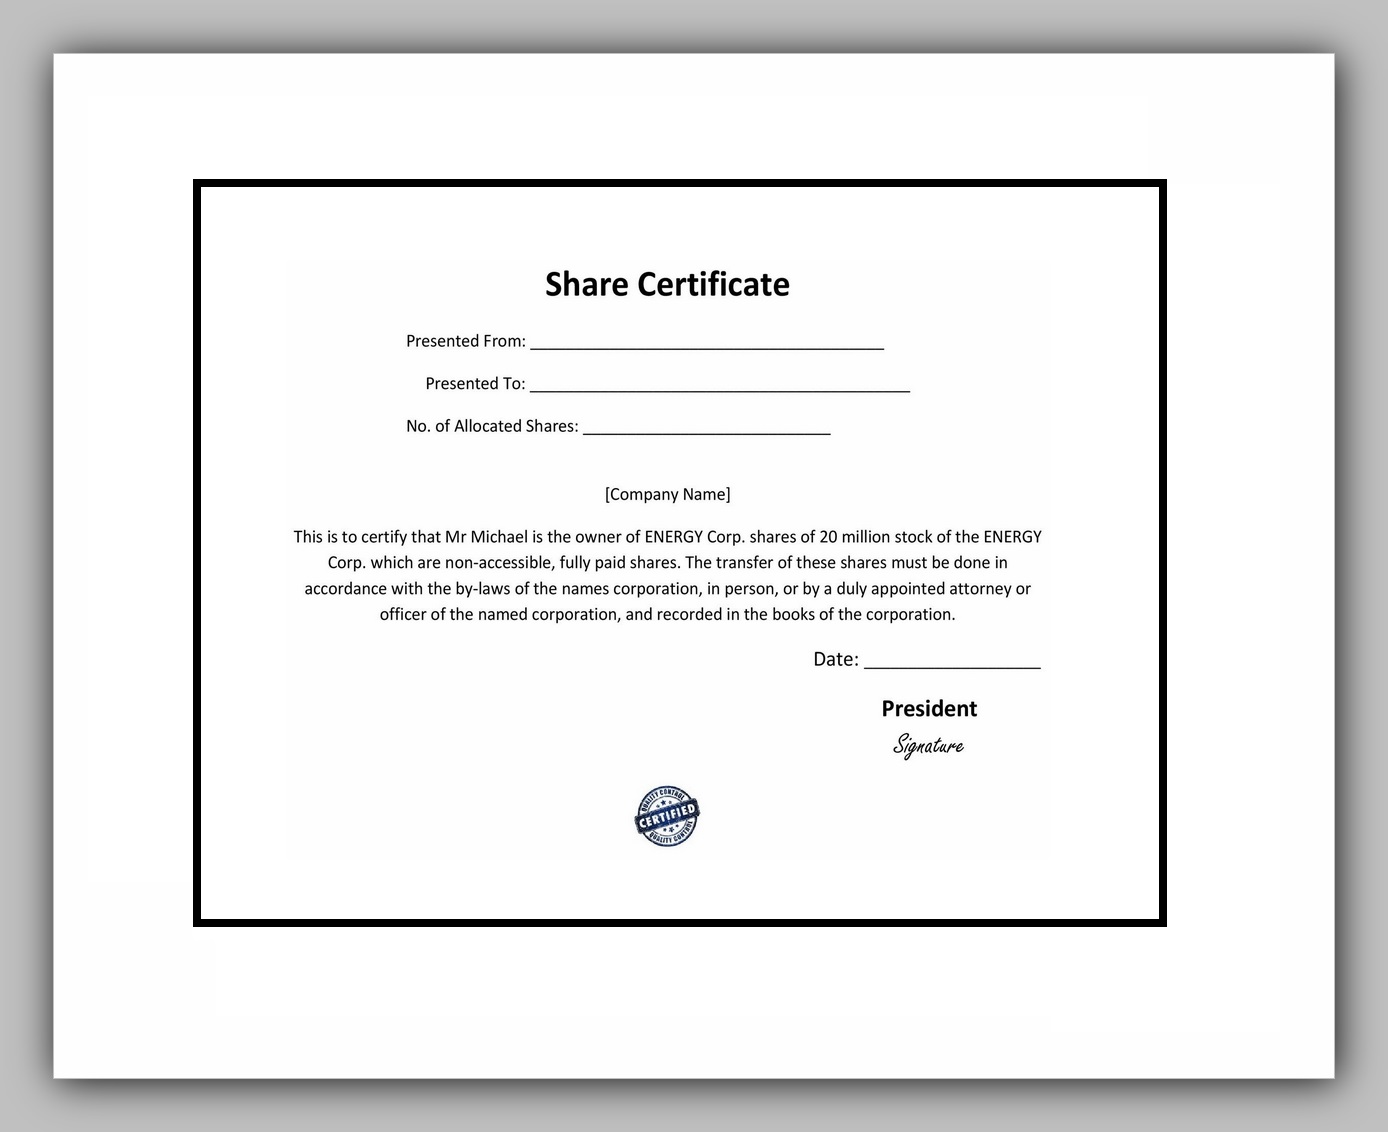 43-free-share-certificate-template-redlinesp